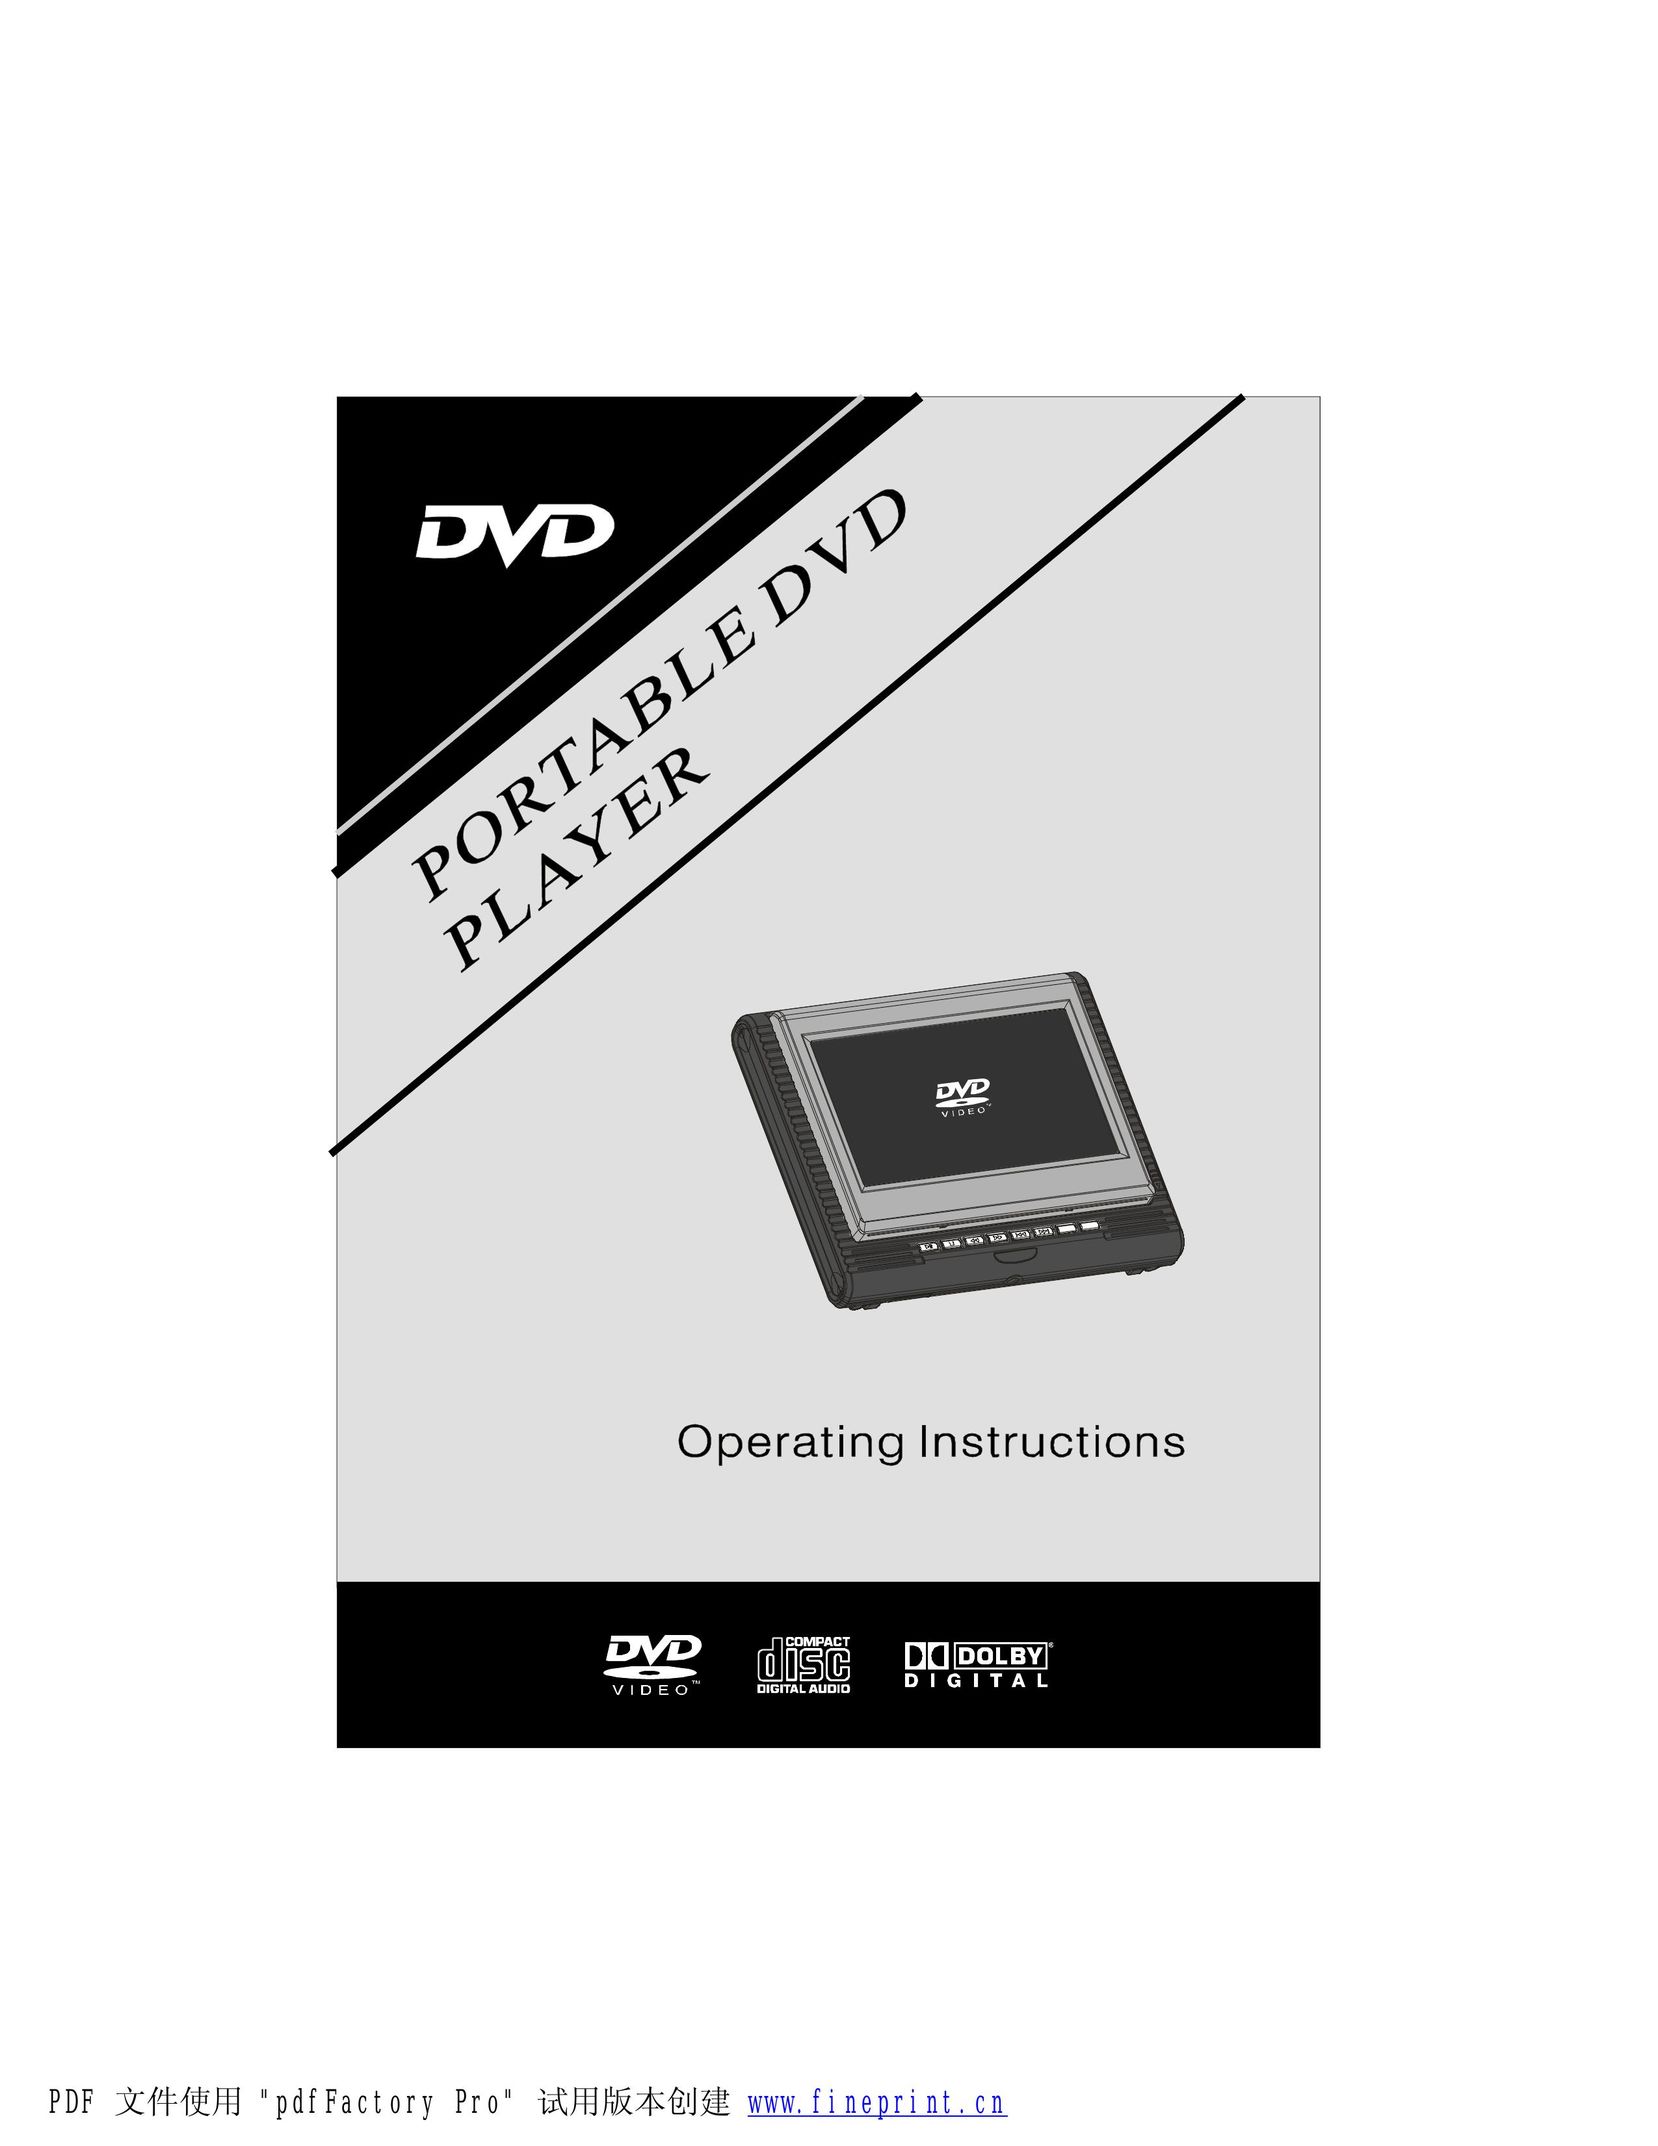 NextBase SDV77-B Portable DVD Player User Manual